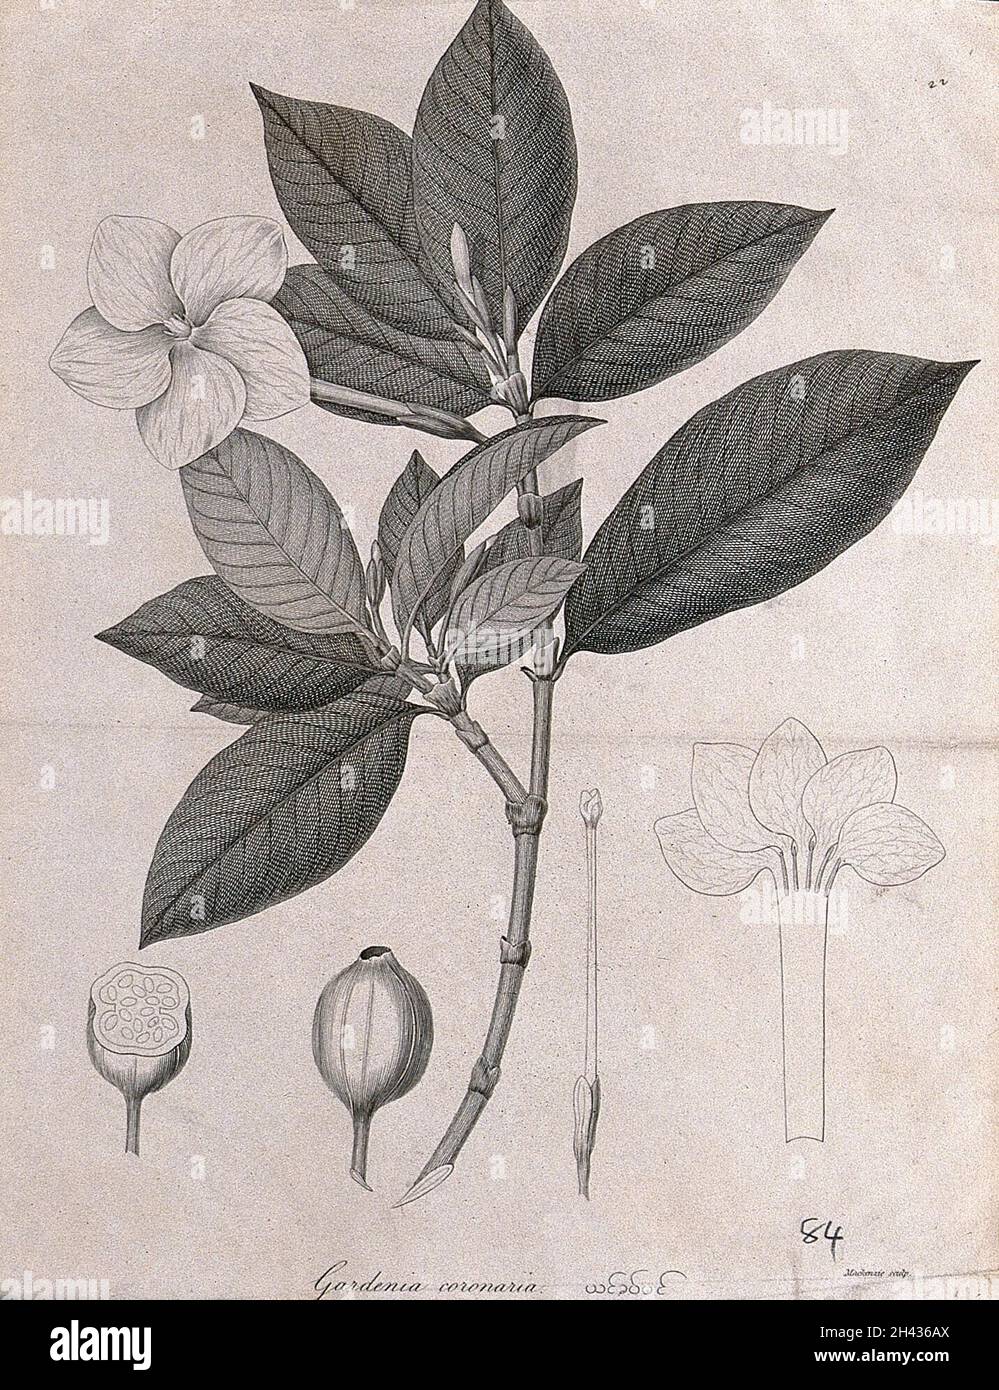 Cape jasmine (Gardenia coronaria): flowering stem with separate floral and fruit segments. Line engraving by Mackenzie, c.1795. Stock Photo